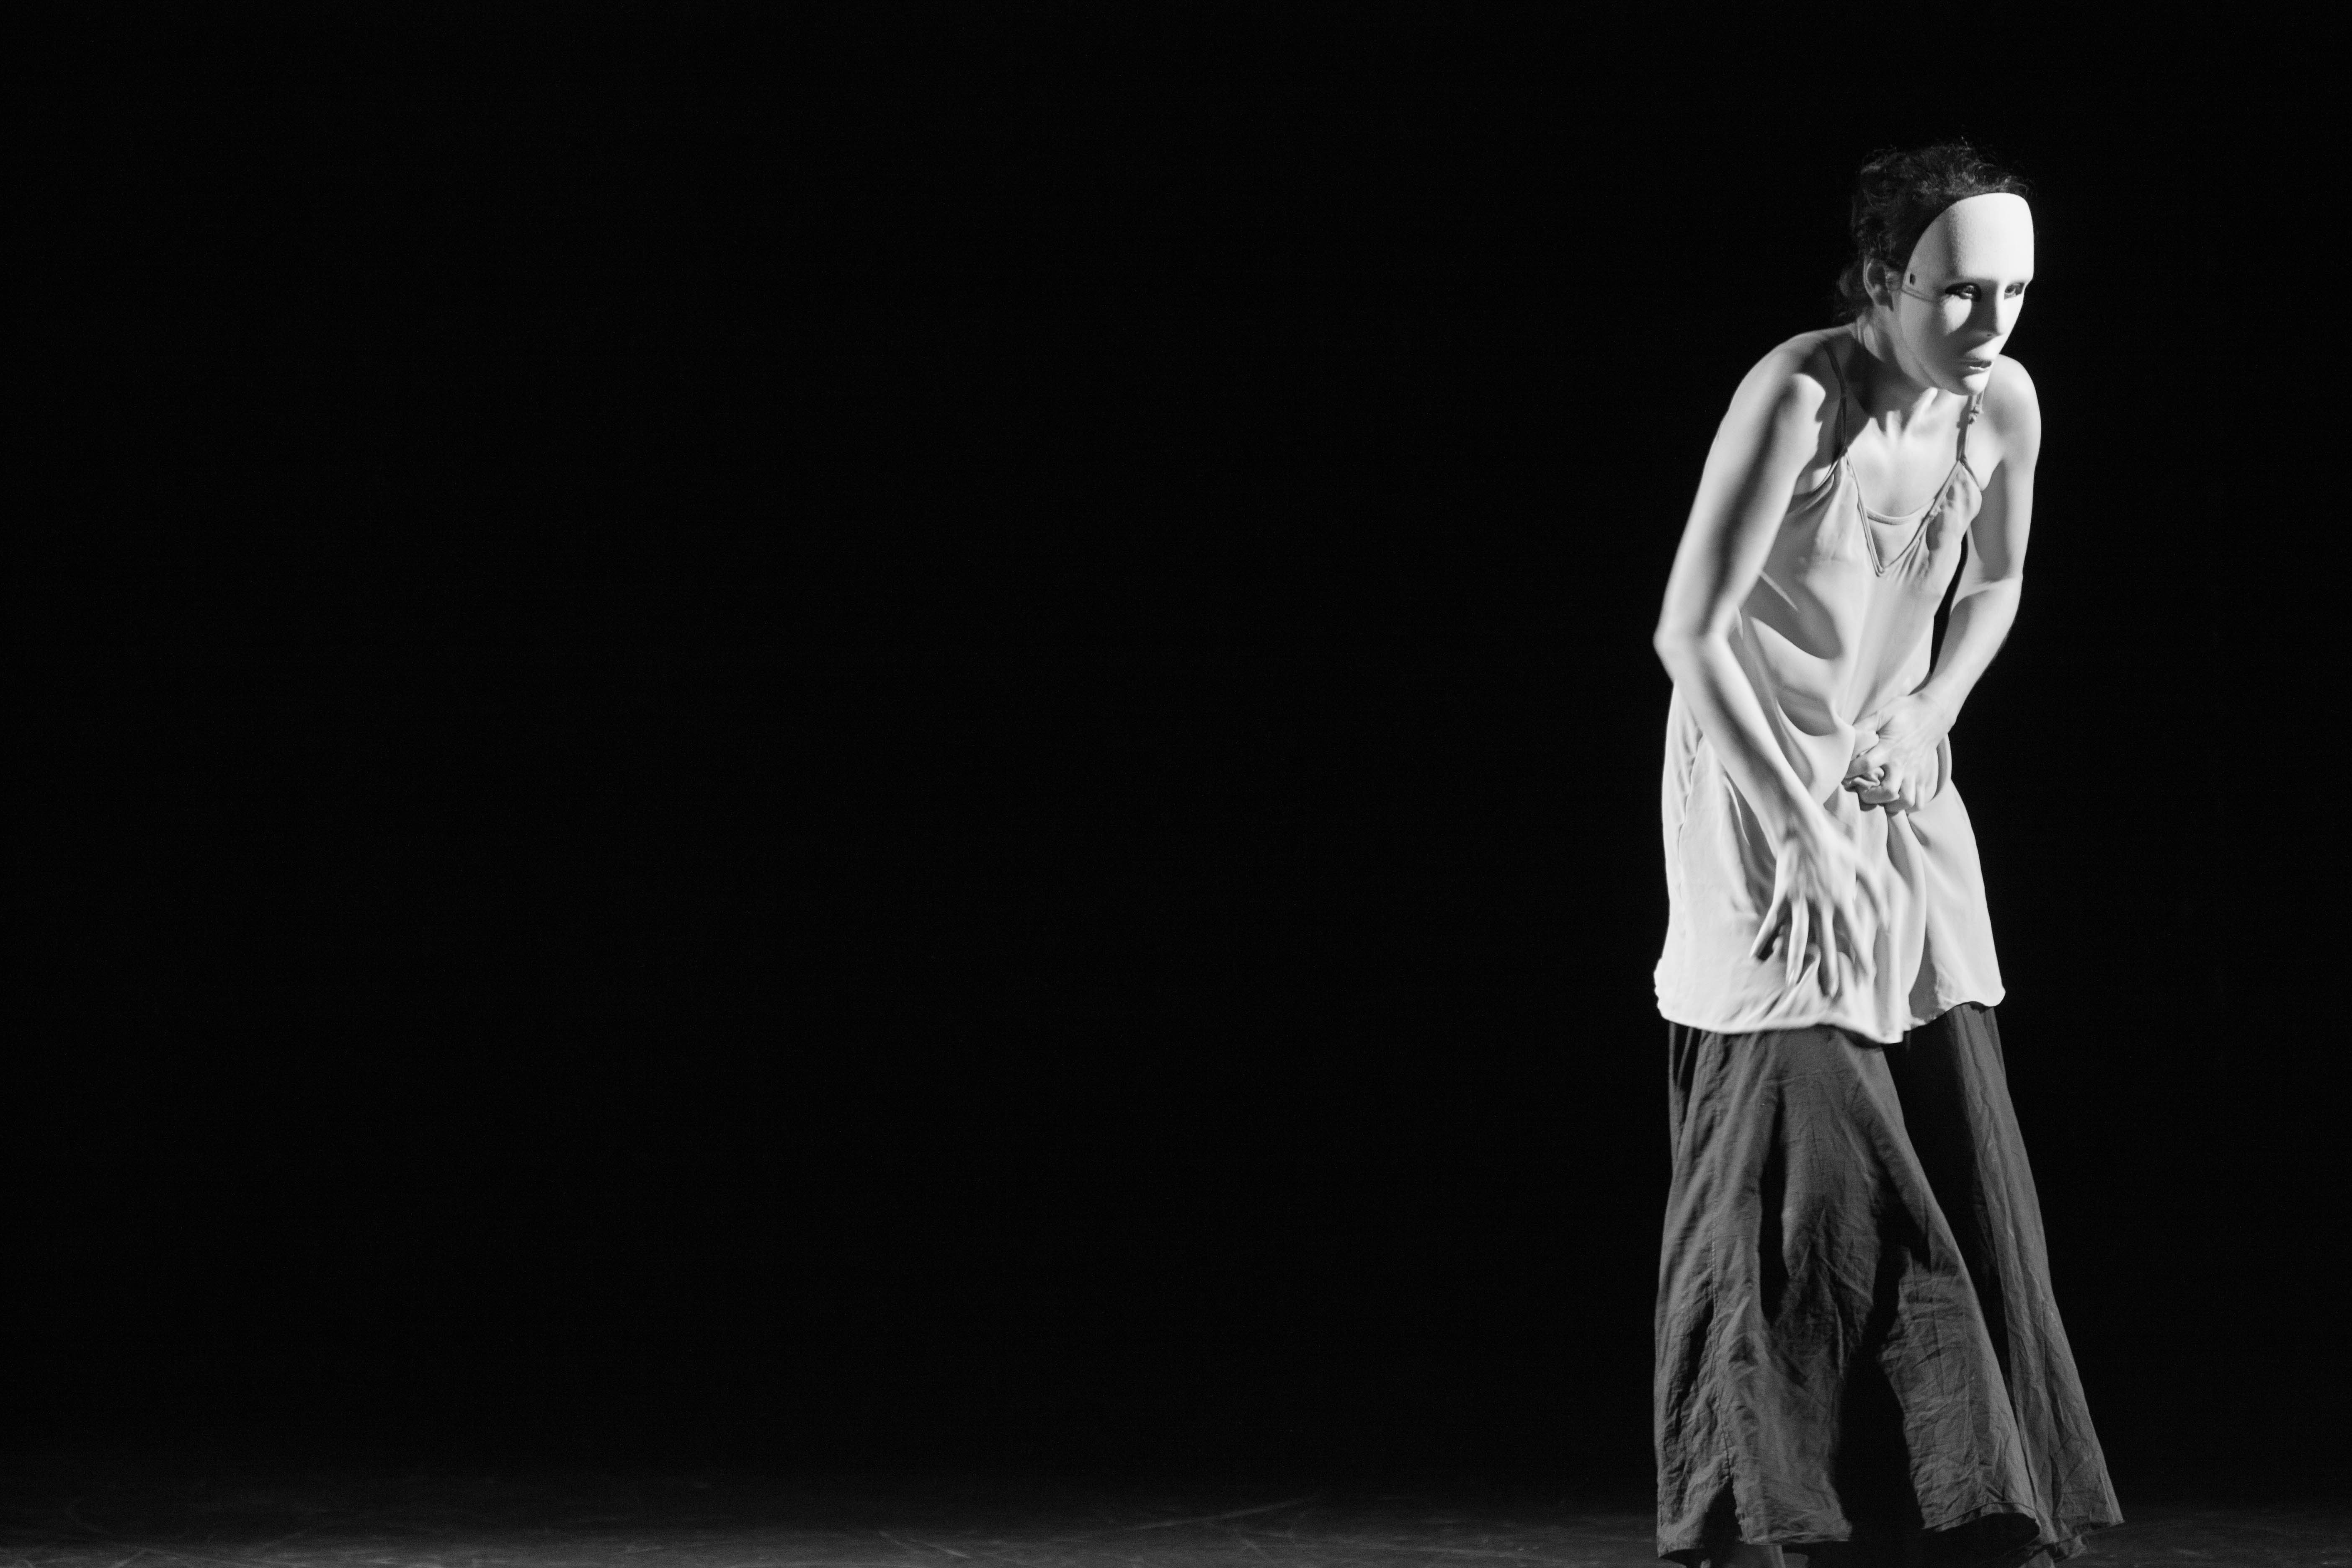 Marie-Louise Crawley performing Myrrha for Avid for Ovid, 2015